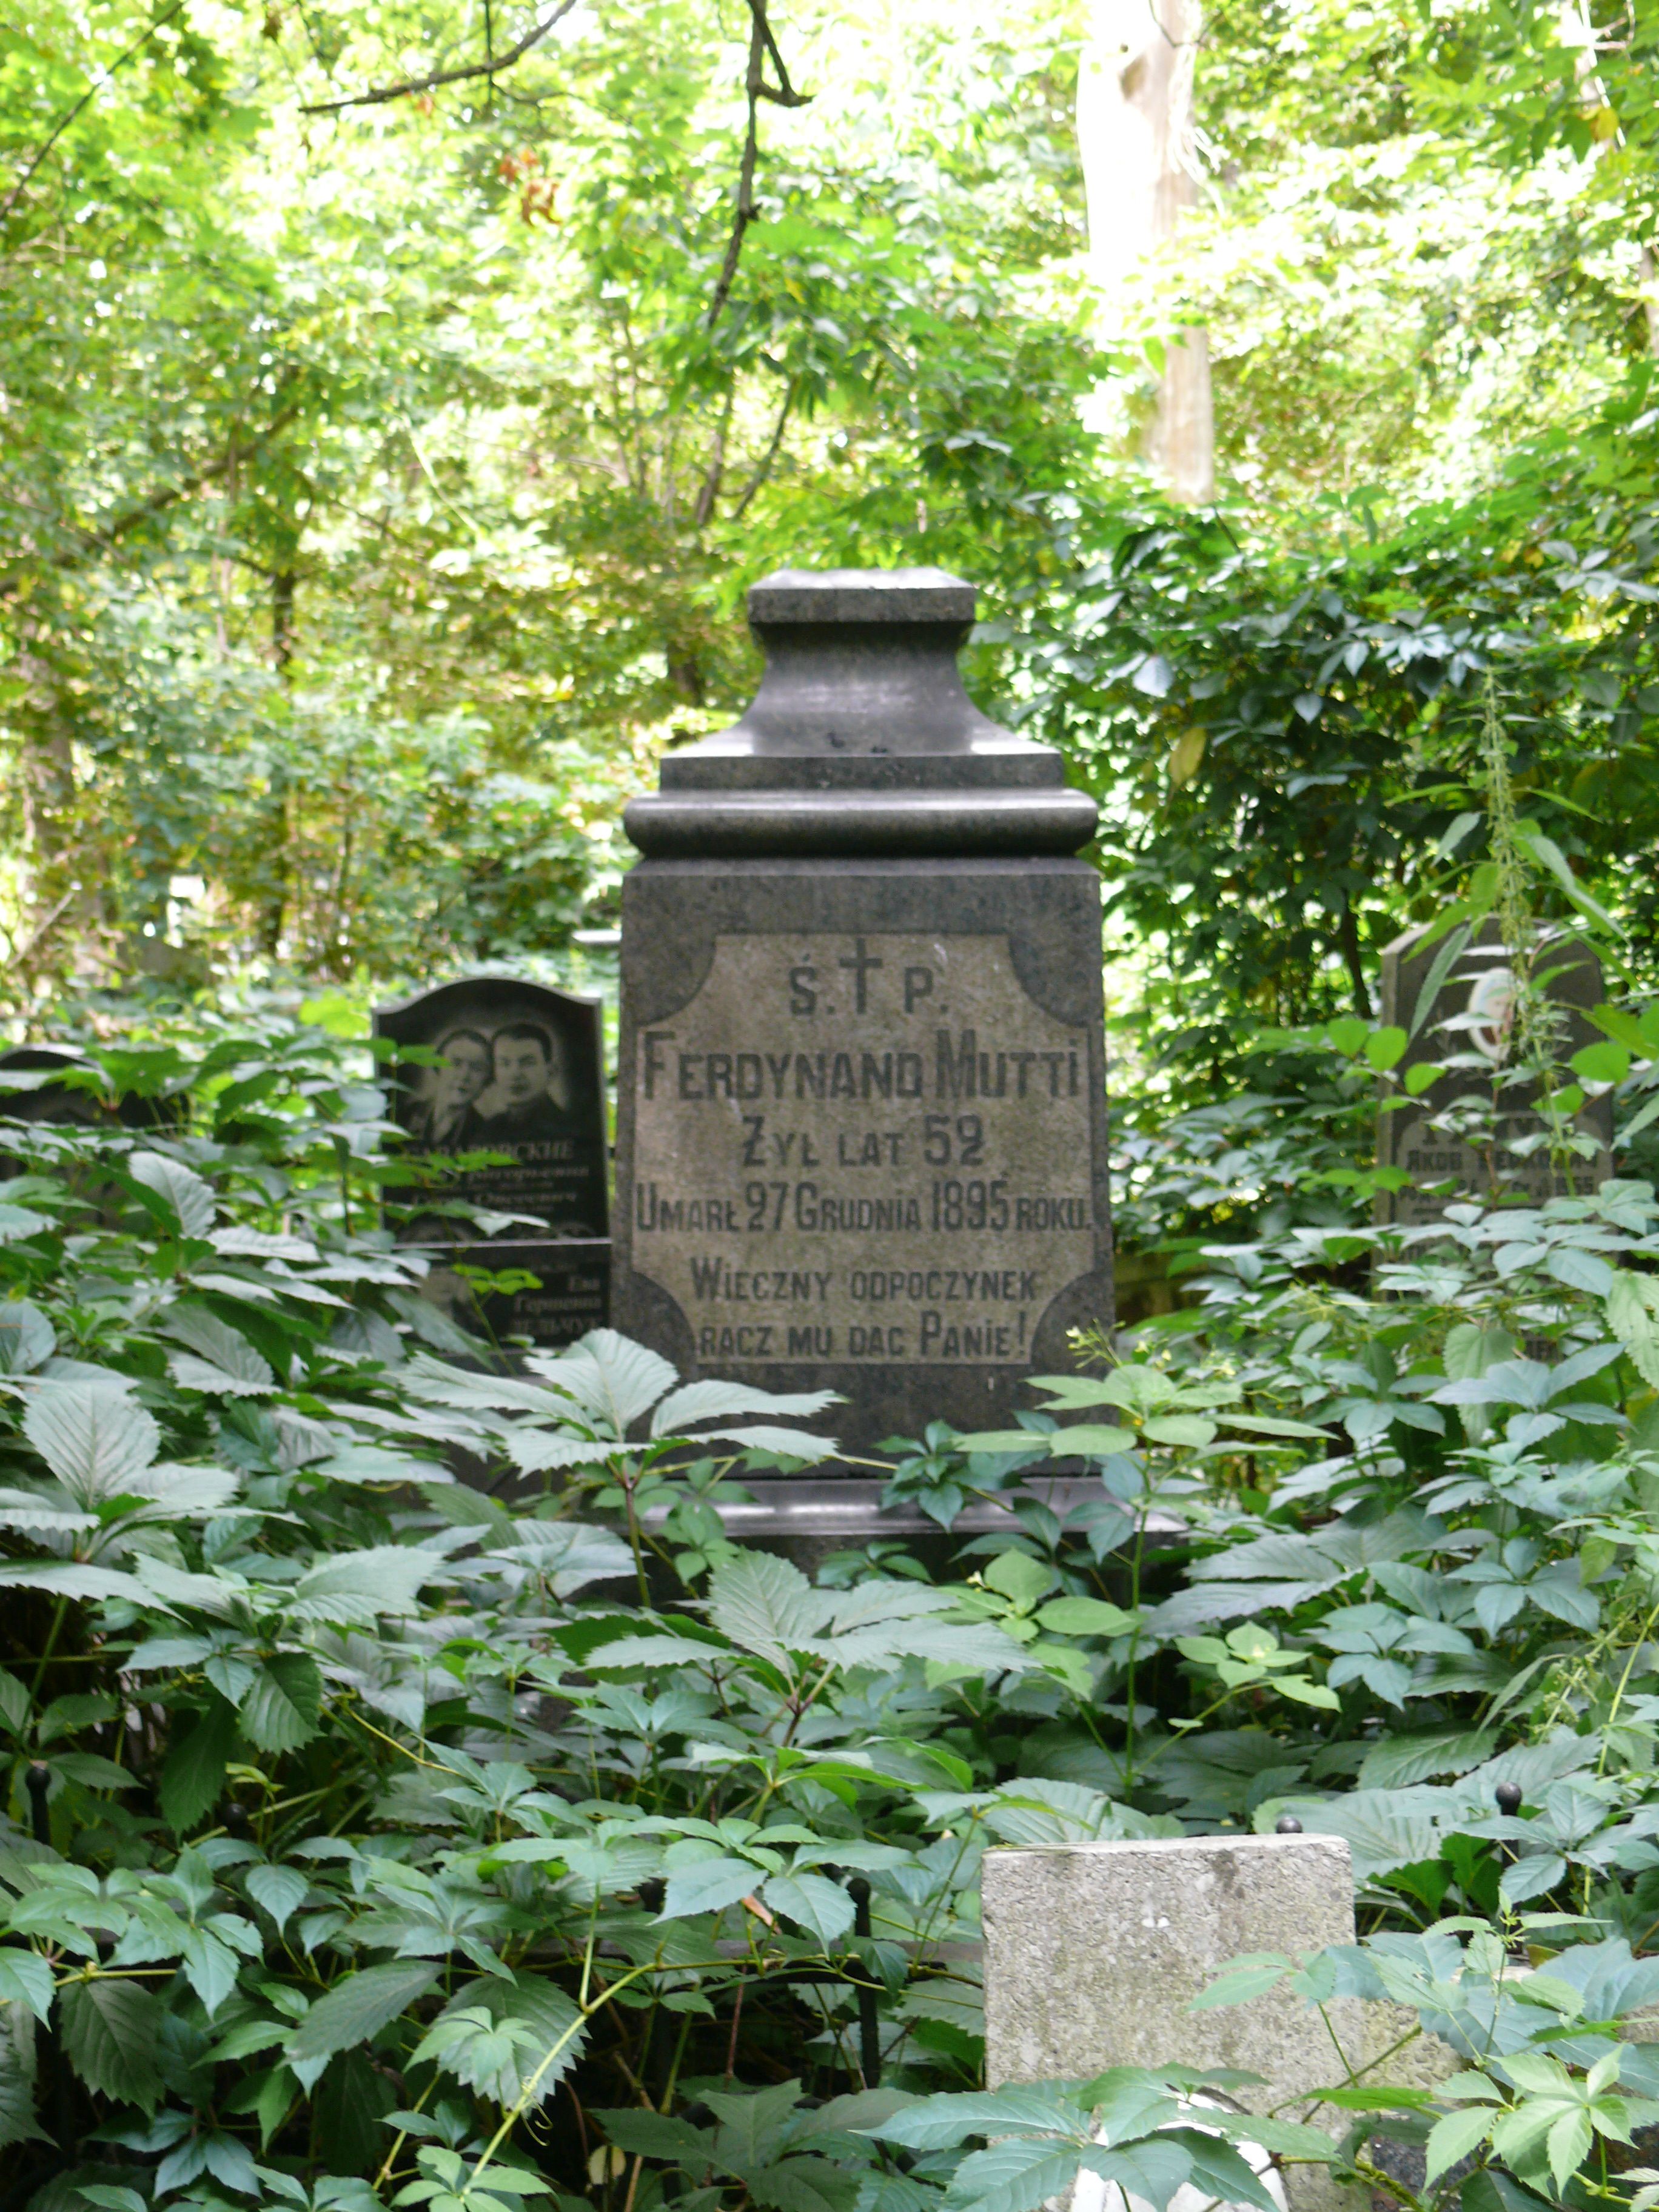 Tombstone of Ferdinand Mutti, Baykova cemetery in Kiev, as of 2021